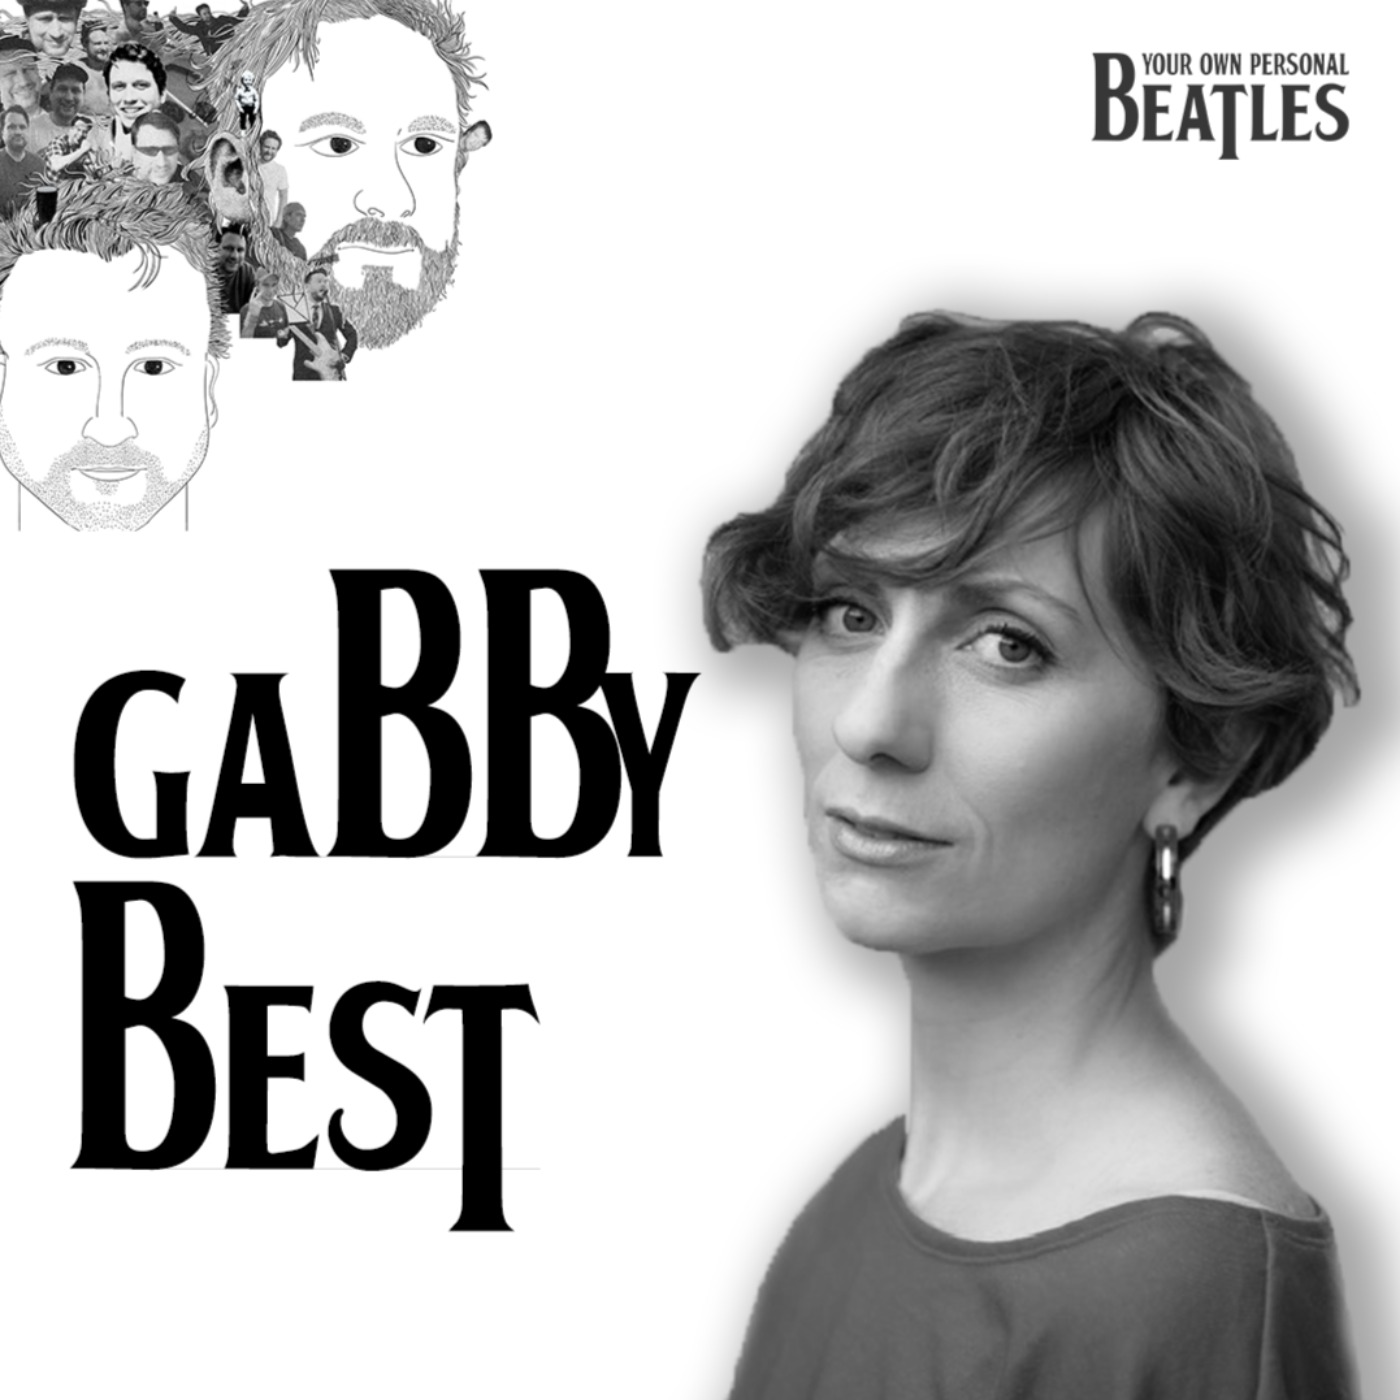 Gabby Best’s Personal Beatles